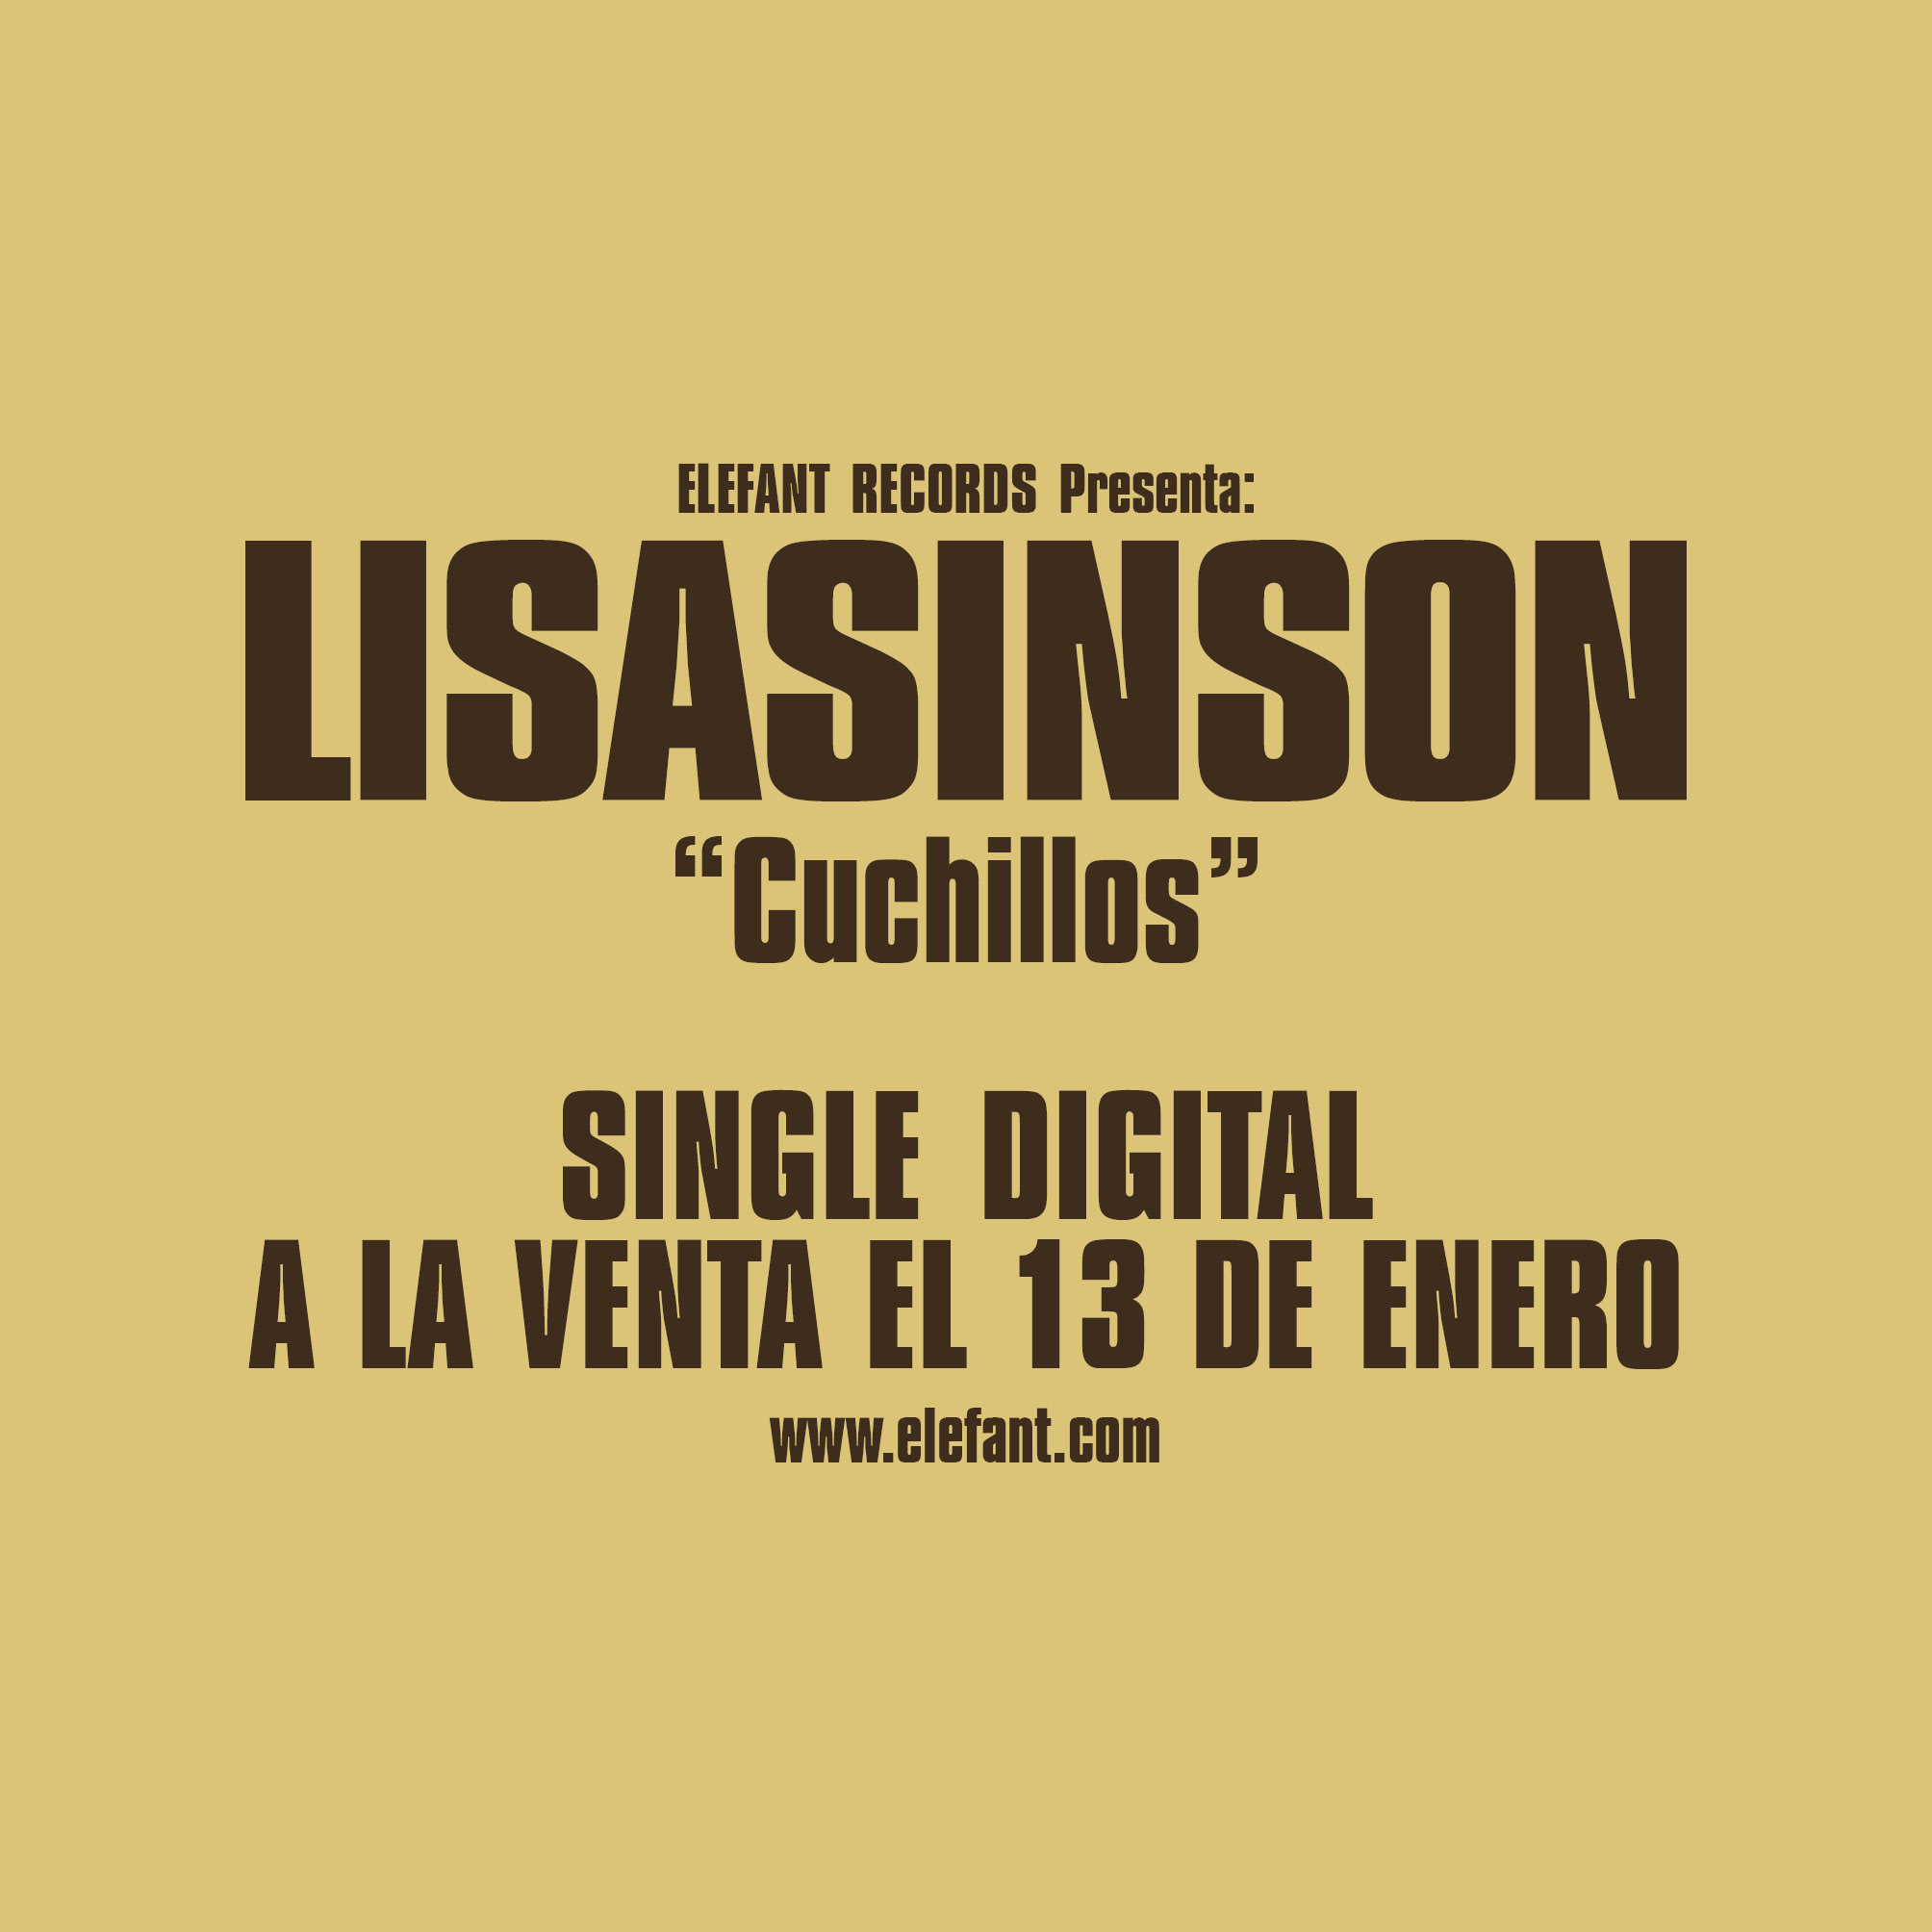  LISASINSON "Cuchillos" Single Digital